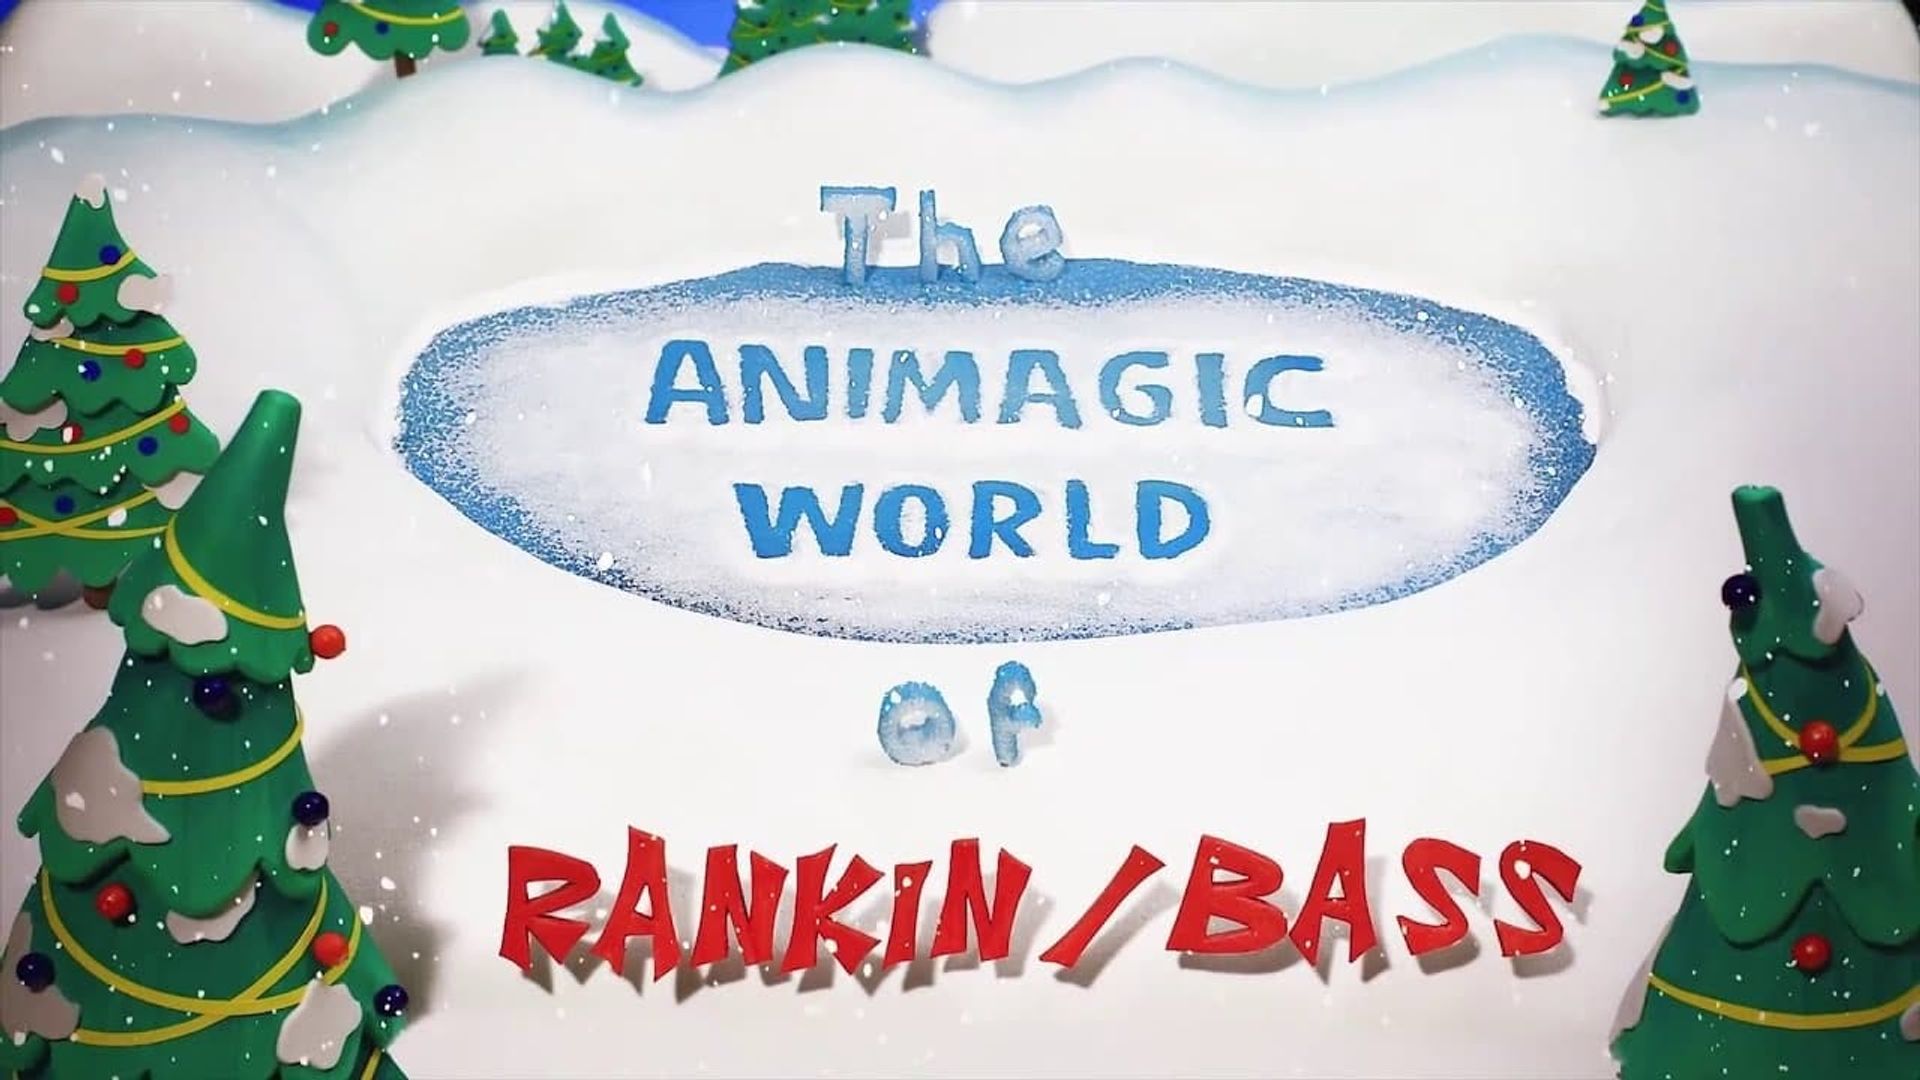 The Animagic World of Rankin/Bass background